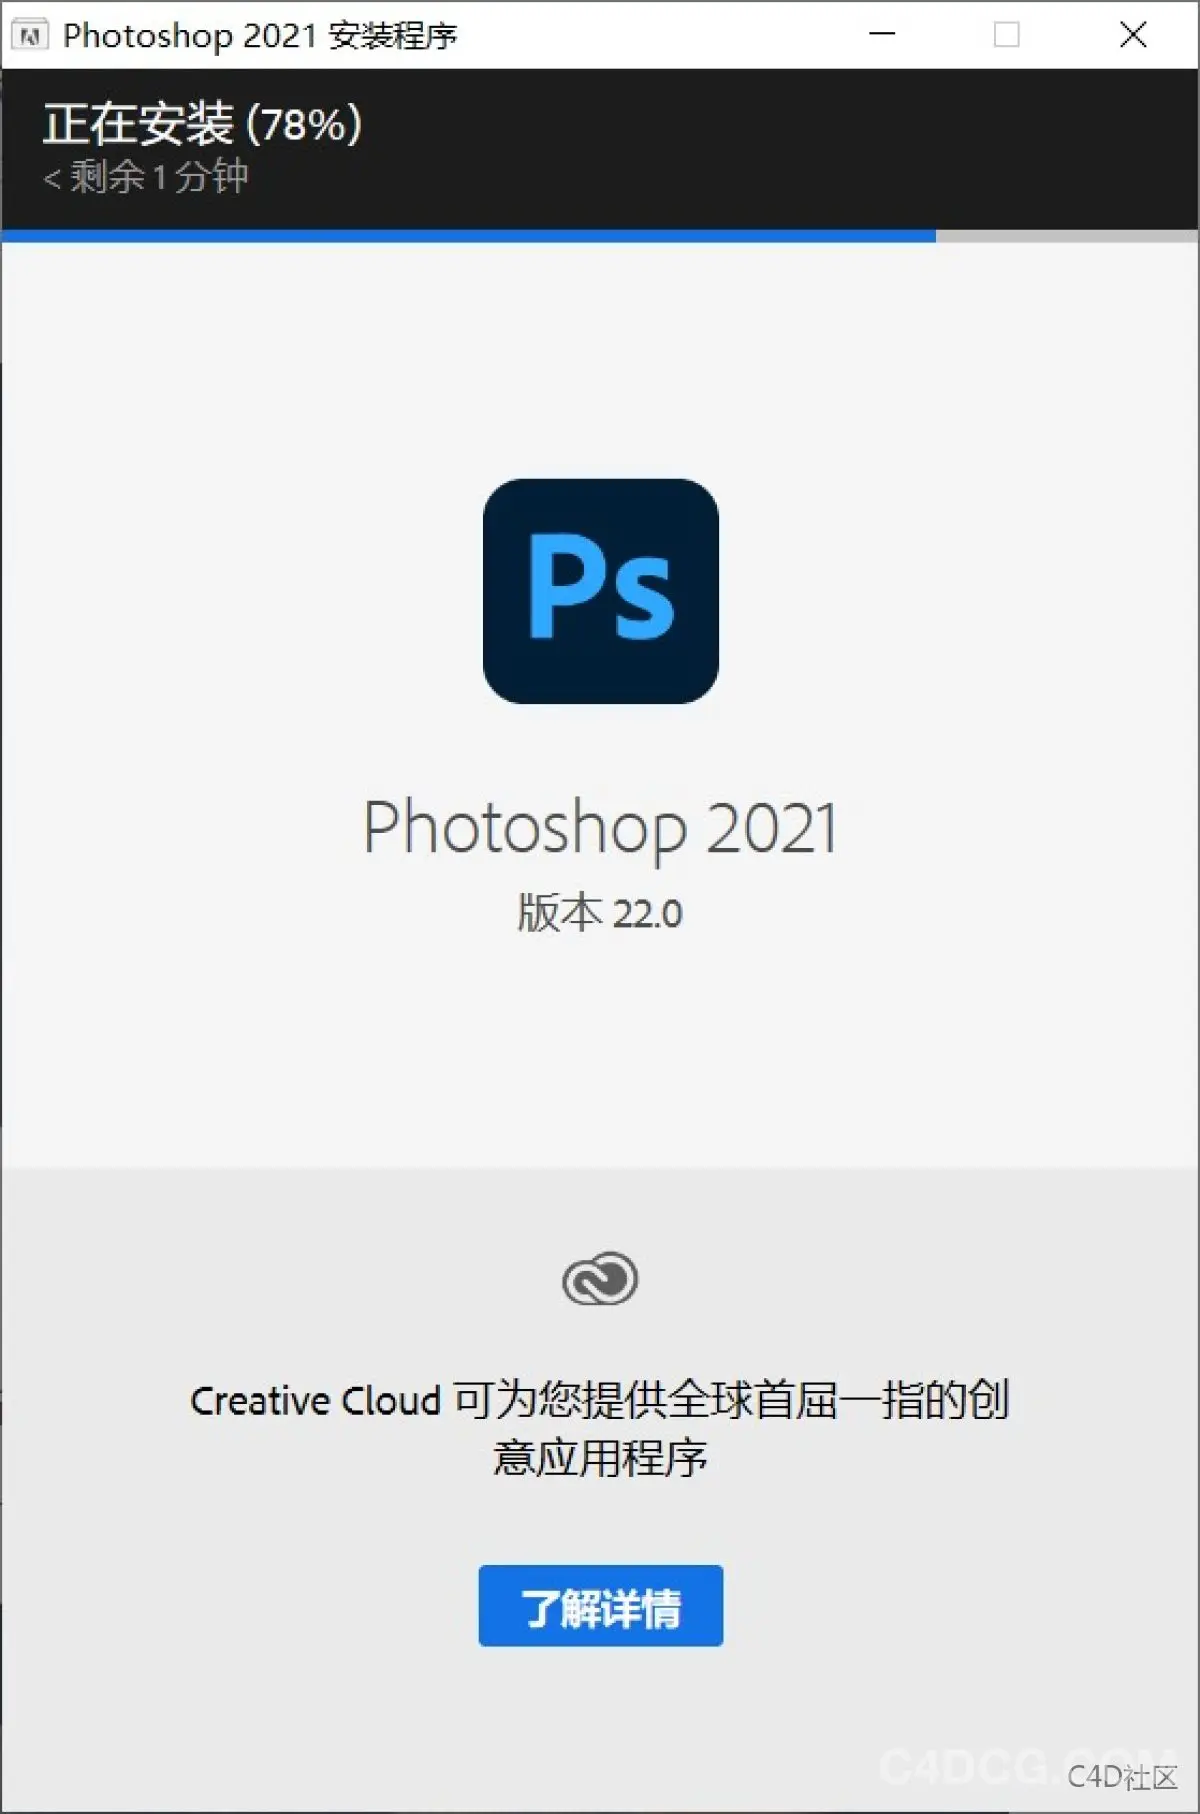 Adobe Photoshop 2021 22.4.2.242 ACR13.3 SP平面设计软件破解版